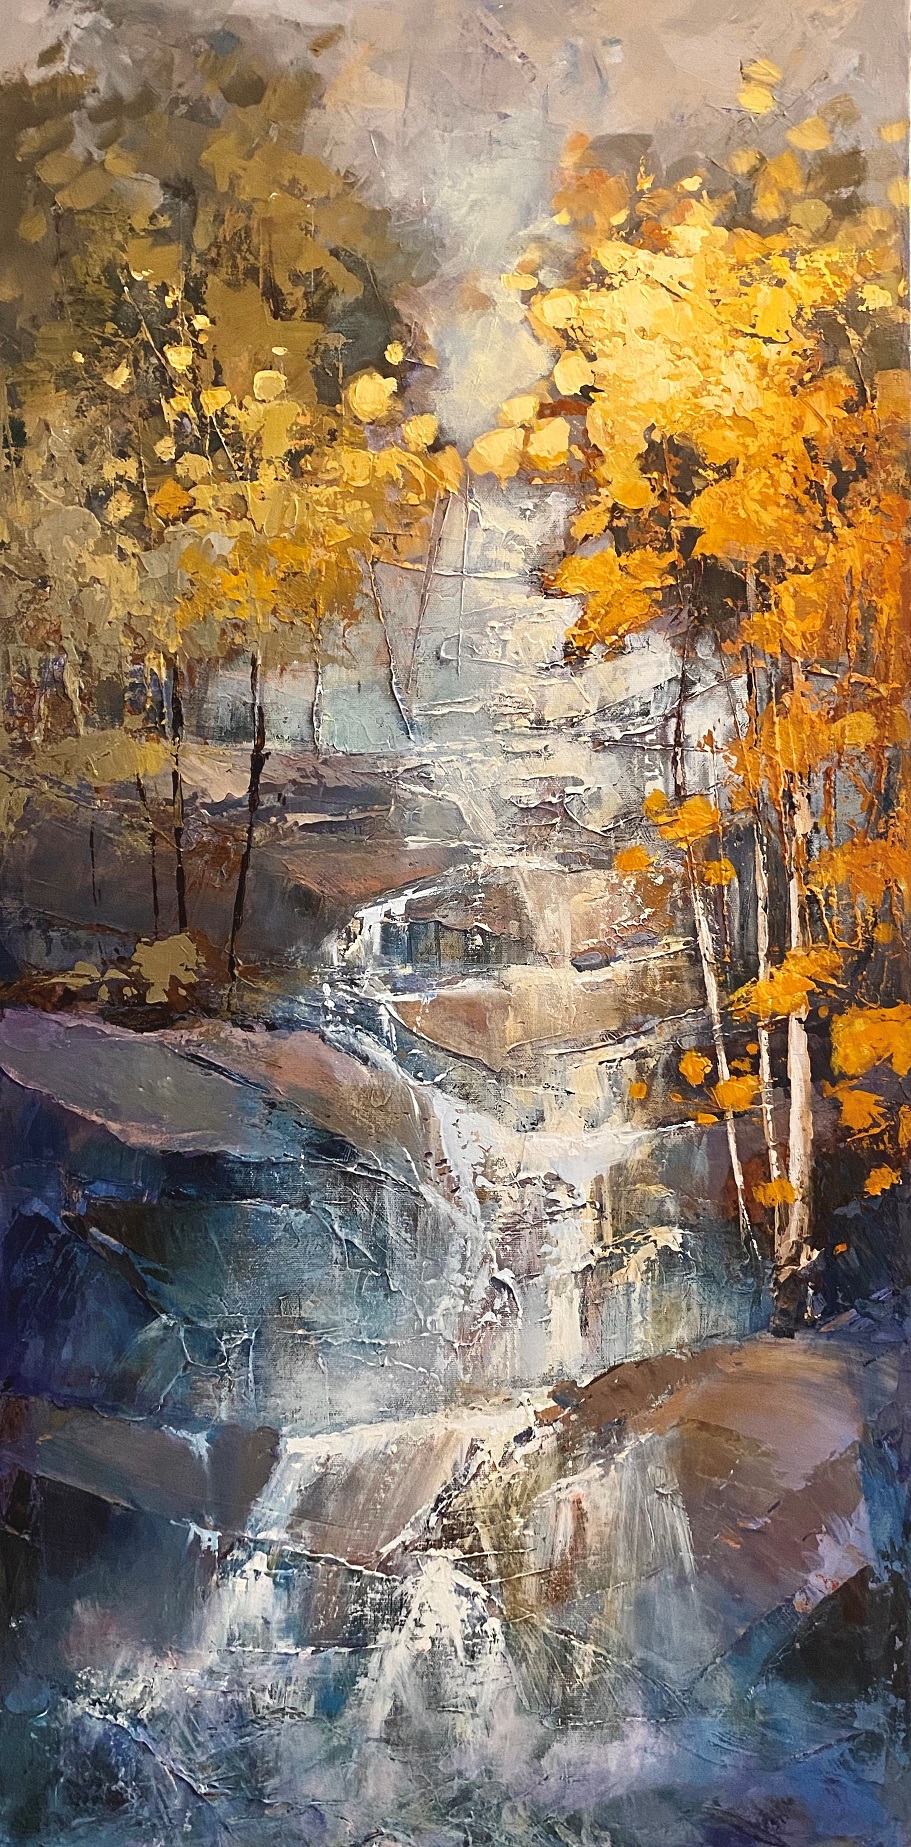 Autumn Cascade by Linda Wilder at The Avenue Gallery, a contemporary fine art gallery in Victoria, BC, Canada.